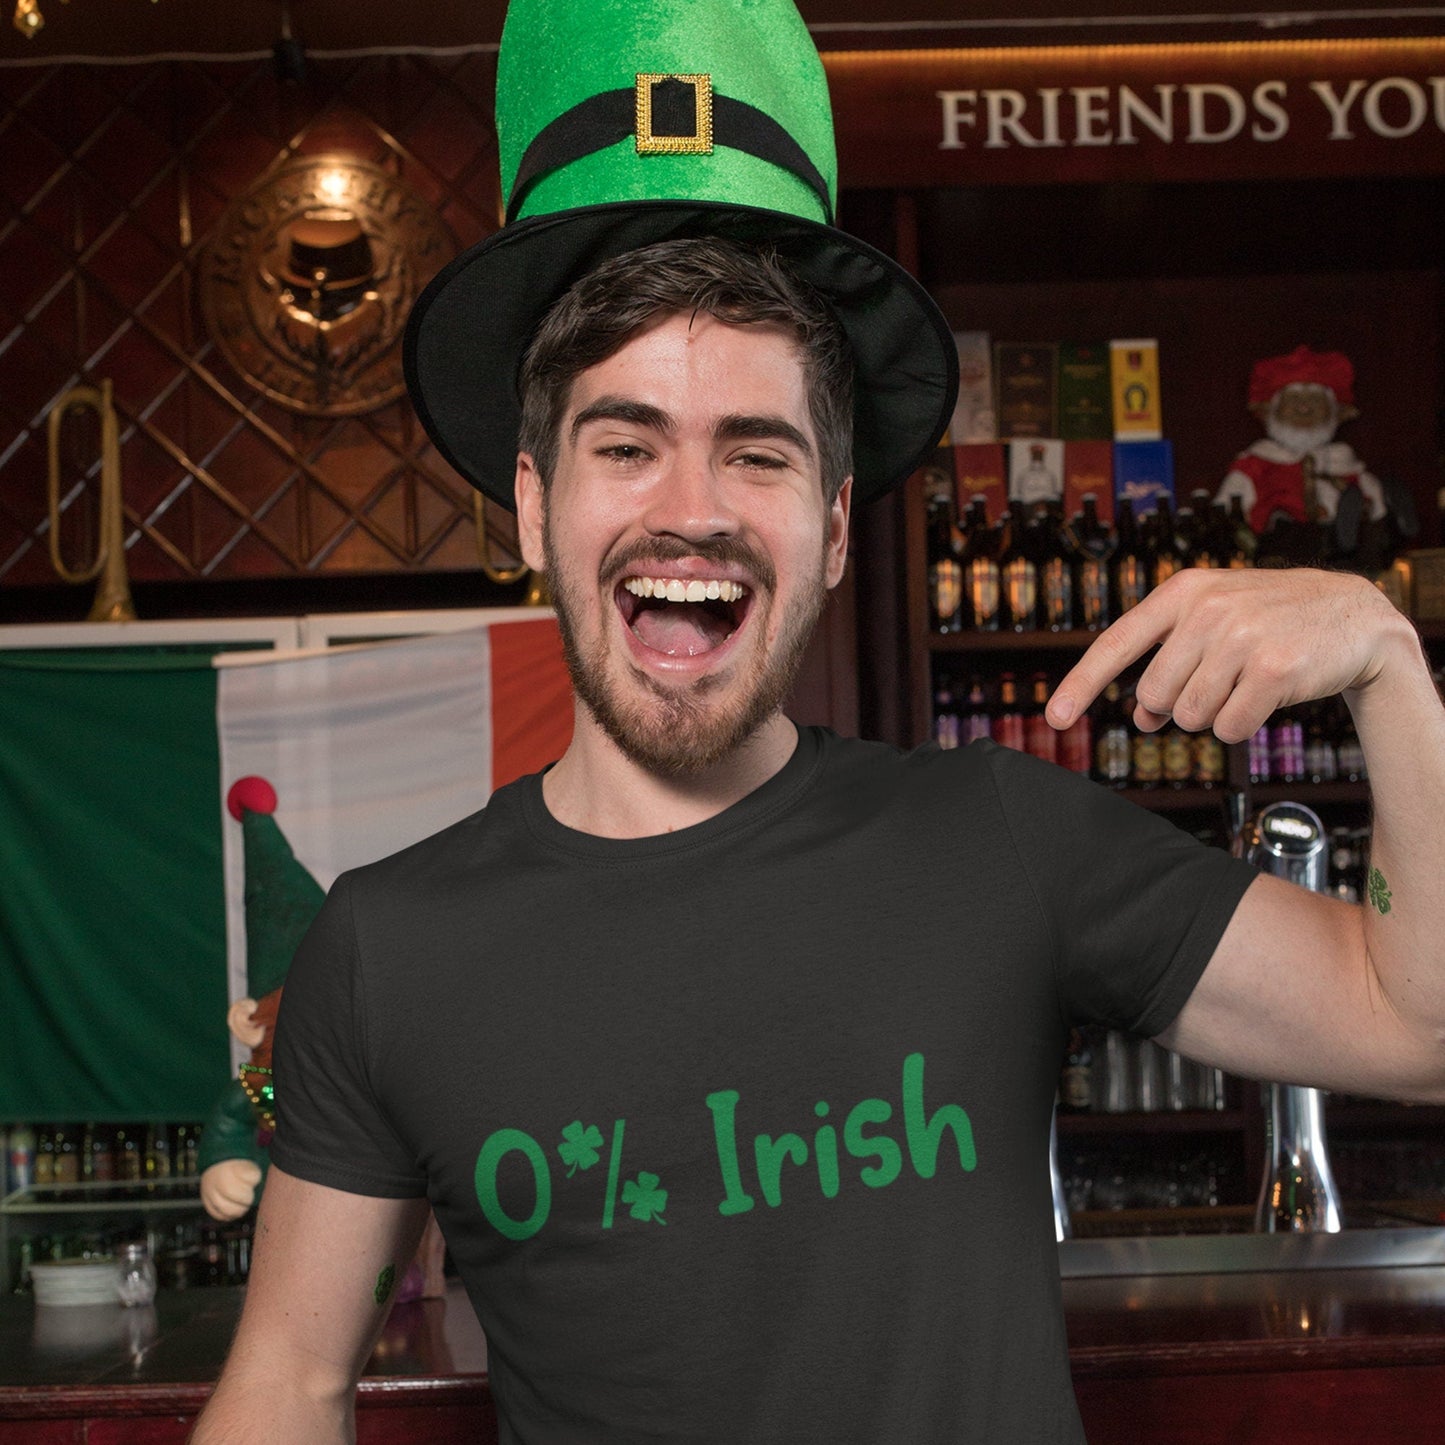 Funny St Patrick's Day Shirt, 0% Irish, Anti St. Patrick, Irish Italian, O'talian pride St. Patty Paddy funny cute drinking party 0% Irish - SBS T Shop